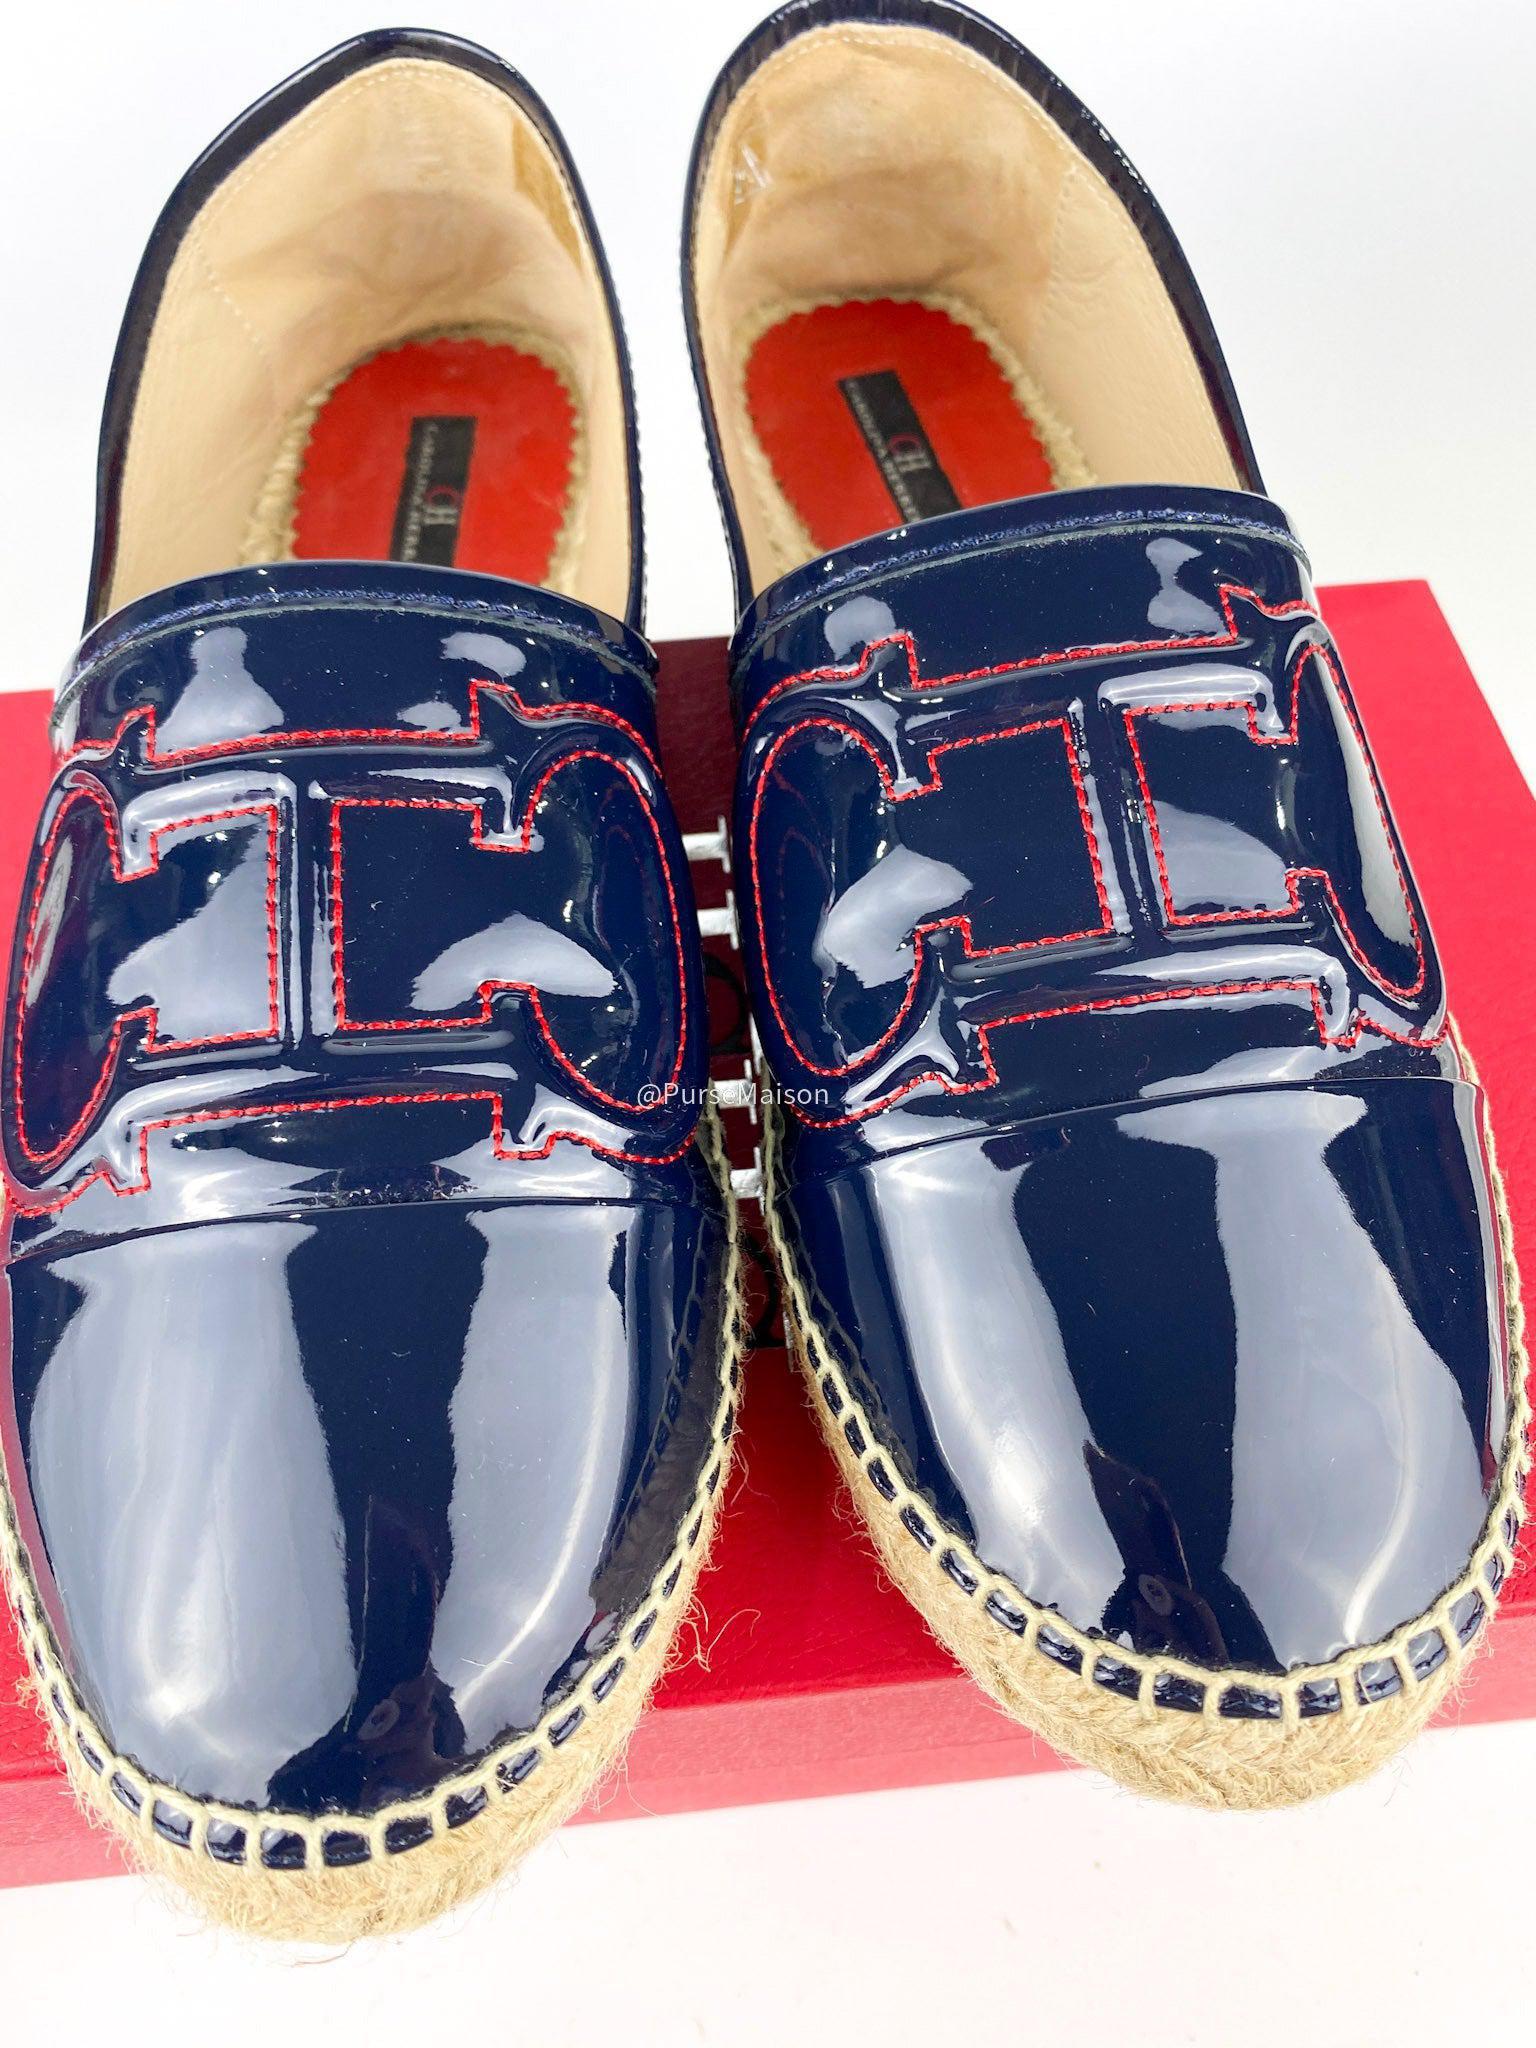 Carolina Herrera Espadrilles (Black/Red) Shoes (Size 39 EUR)